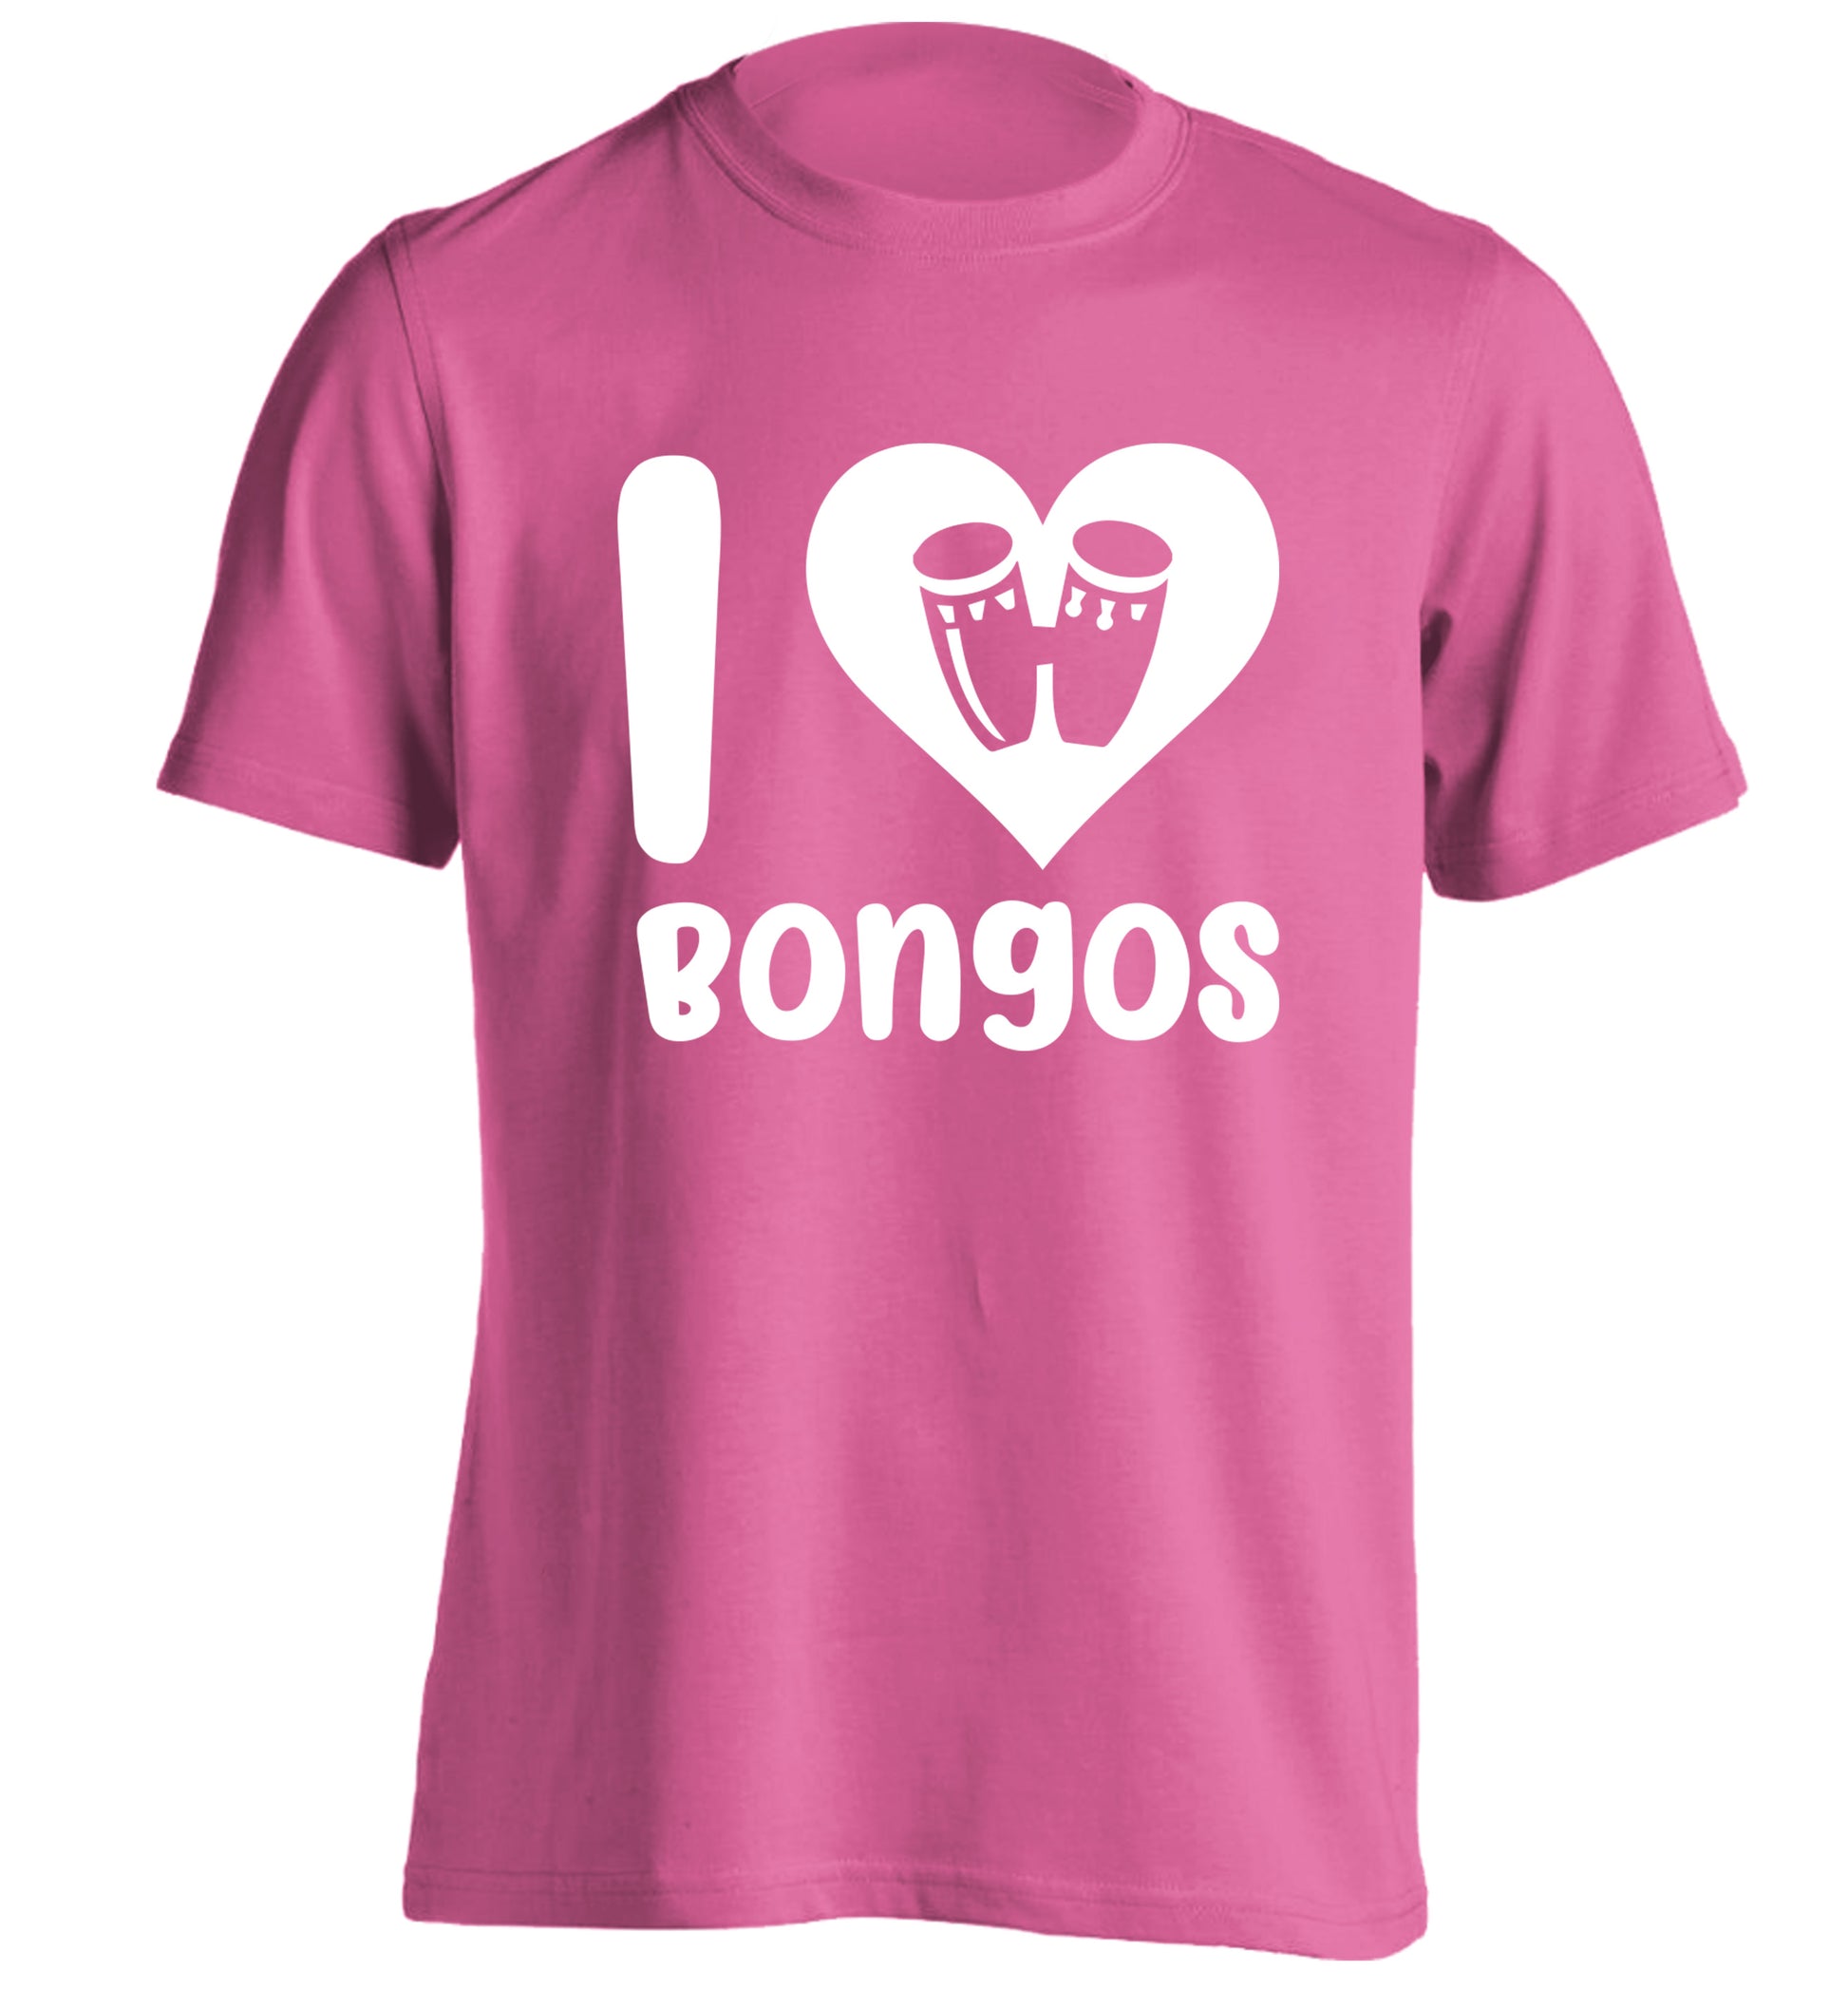 I love bongos adults unisex pink Tshirt 2XL